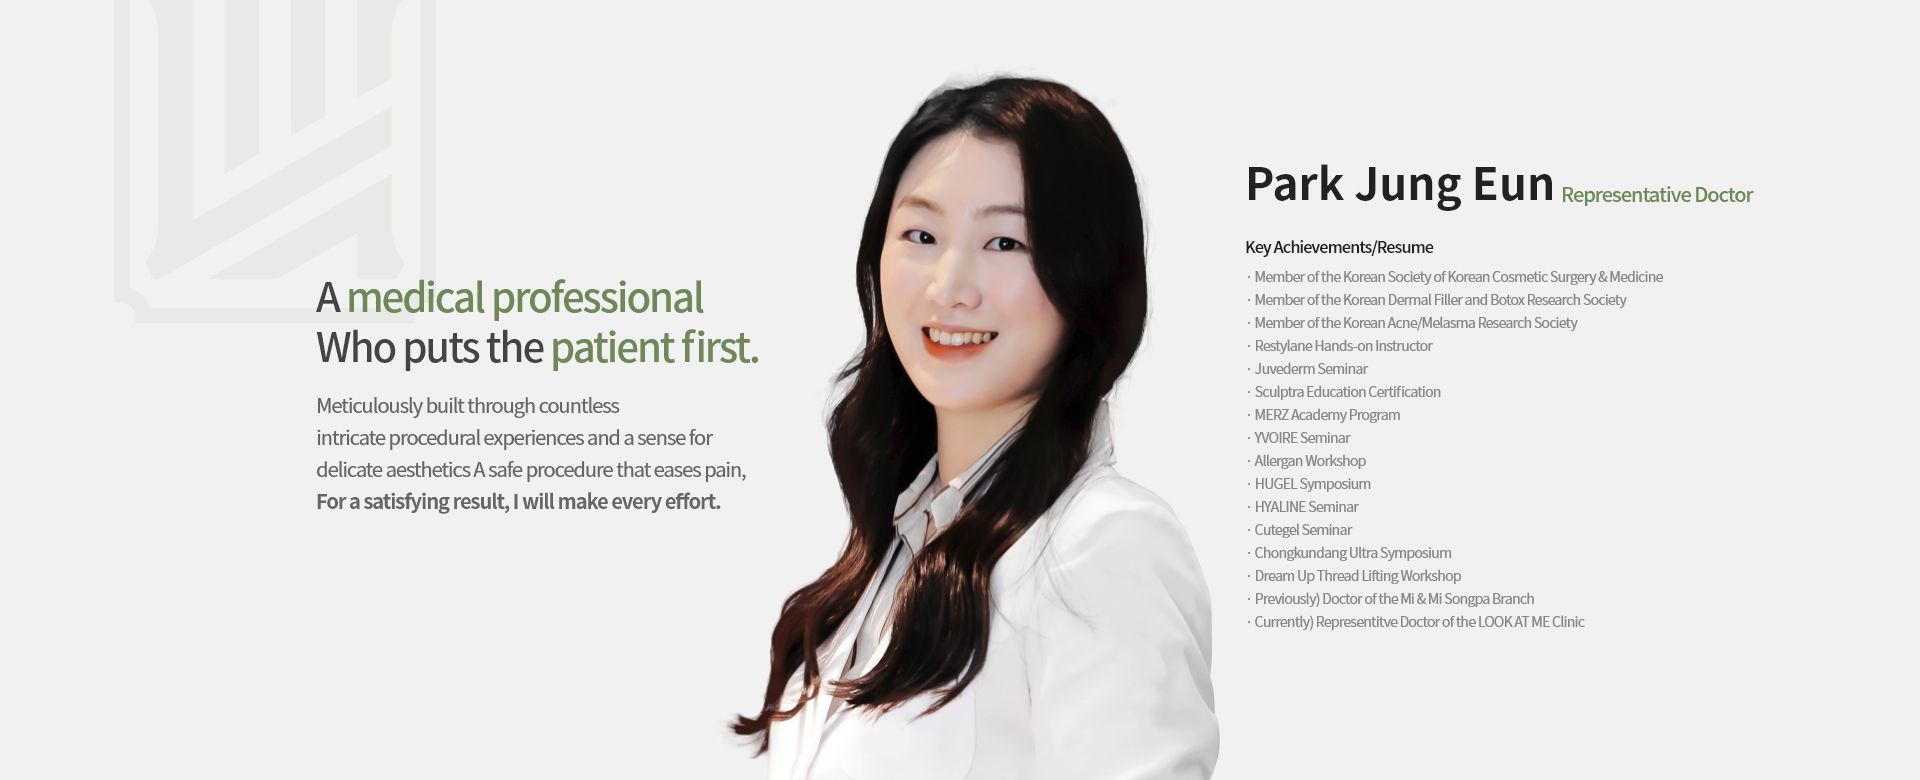 Look At Me Clinic’s Representative Doctor Park Jung Eun’s expertise has built the best beauty clinic in Songpa-Gu, Seoul Korea.